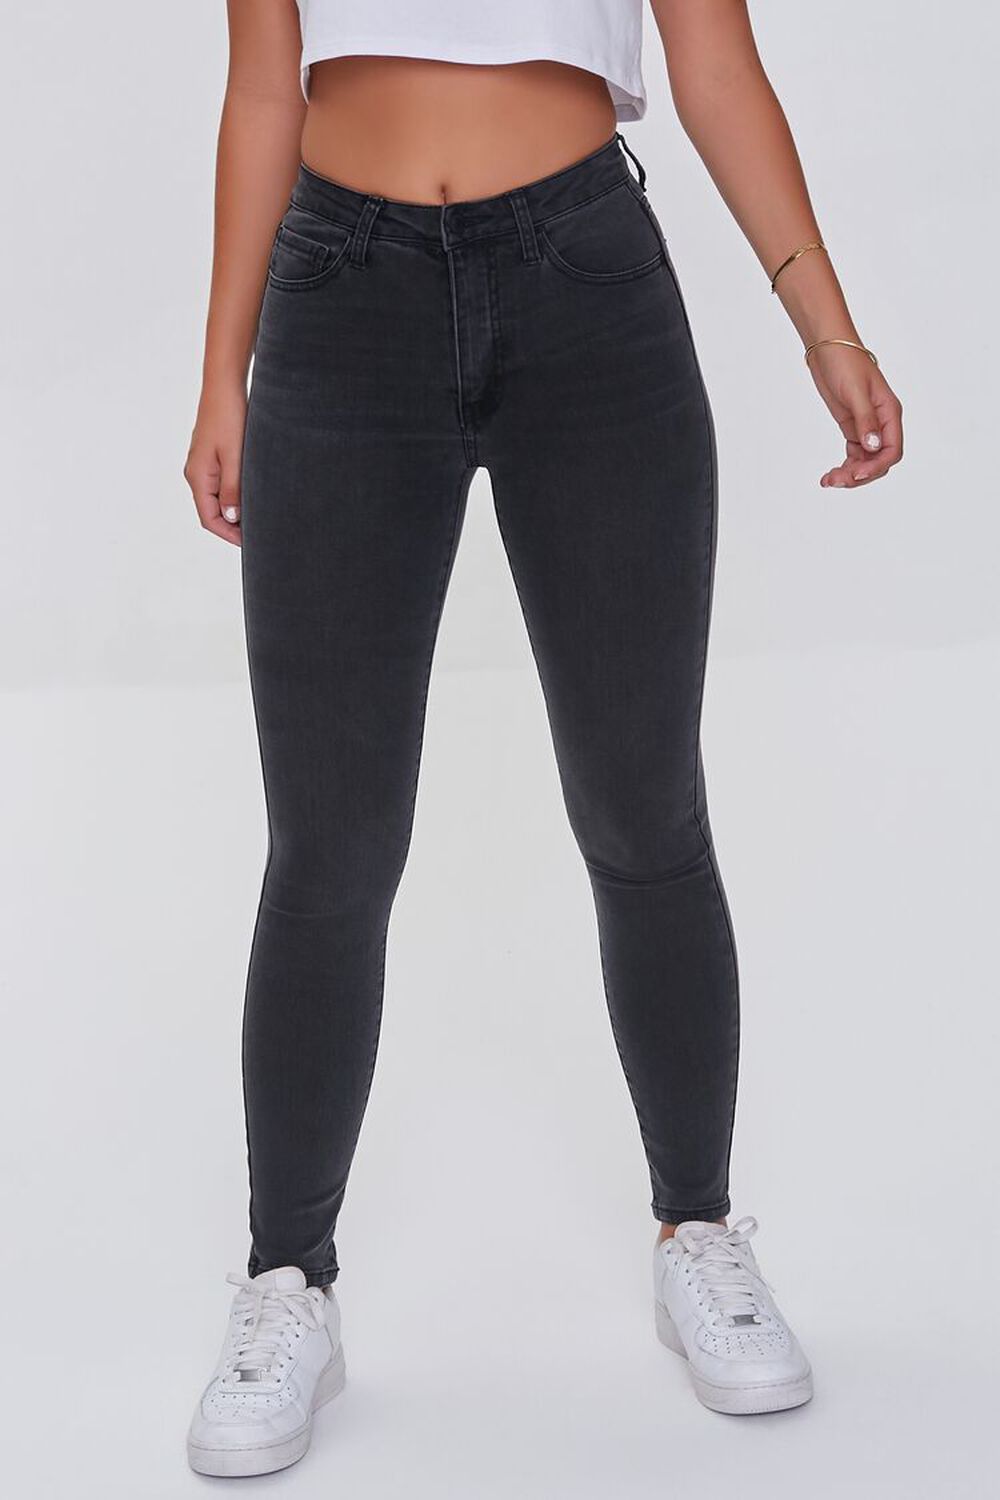 BLACK Essential Mid-Rise Skinny Jeans, image 2